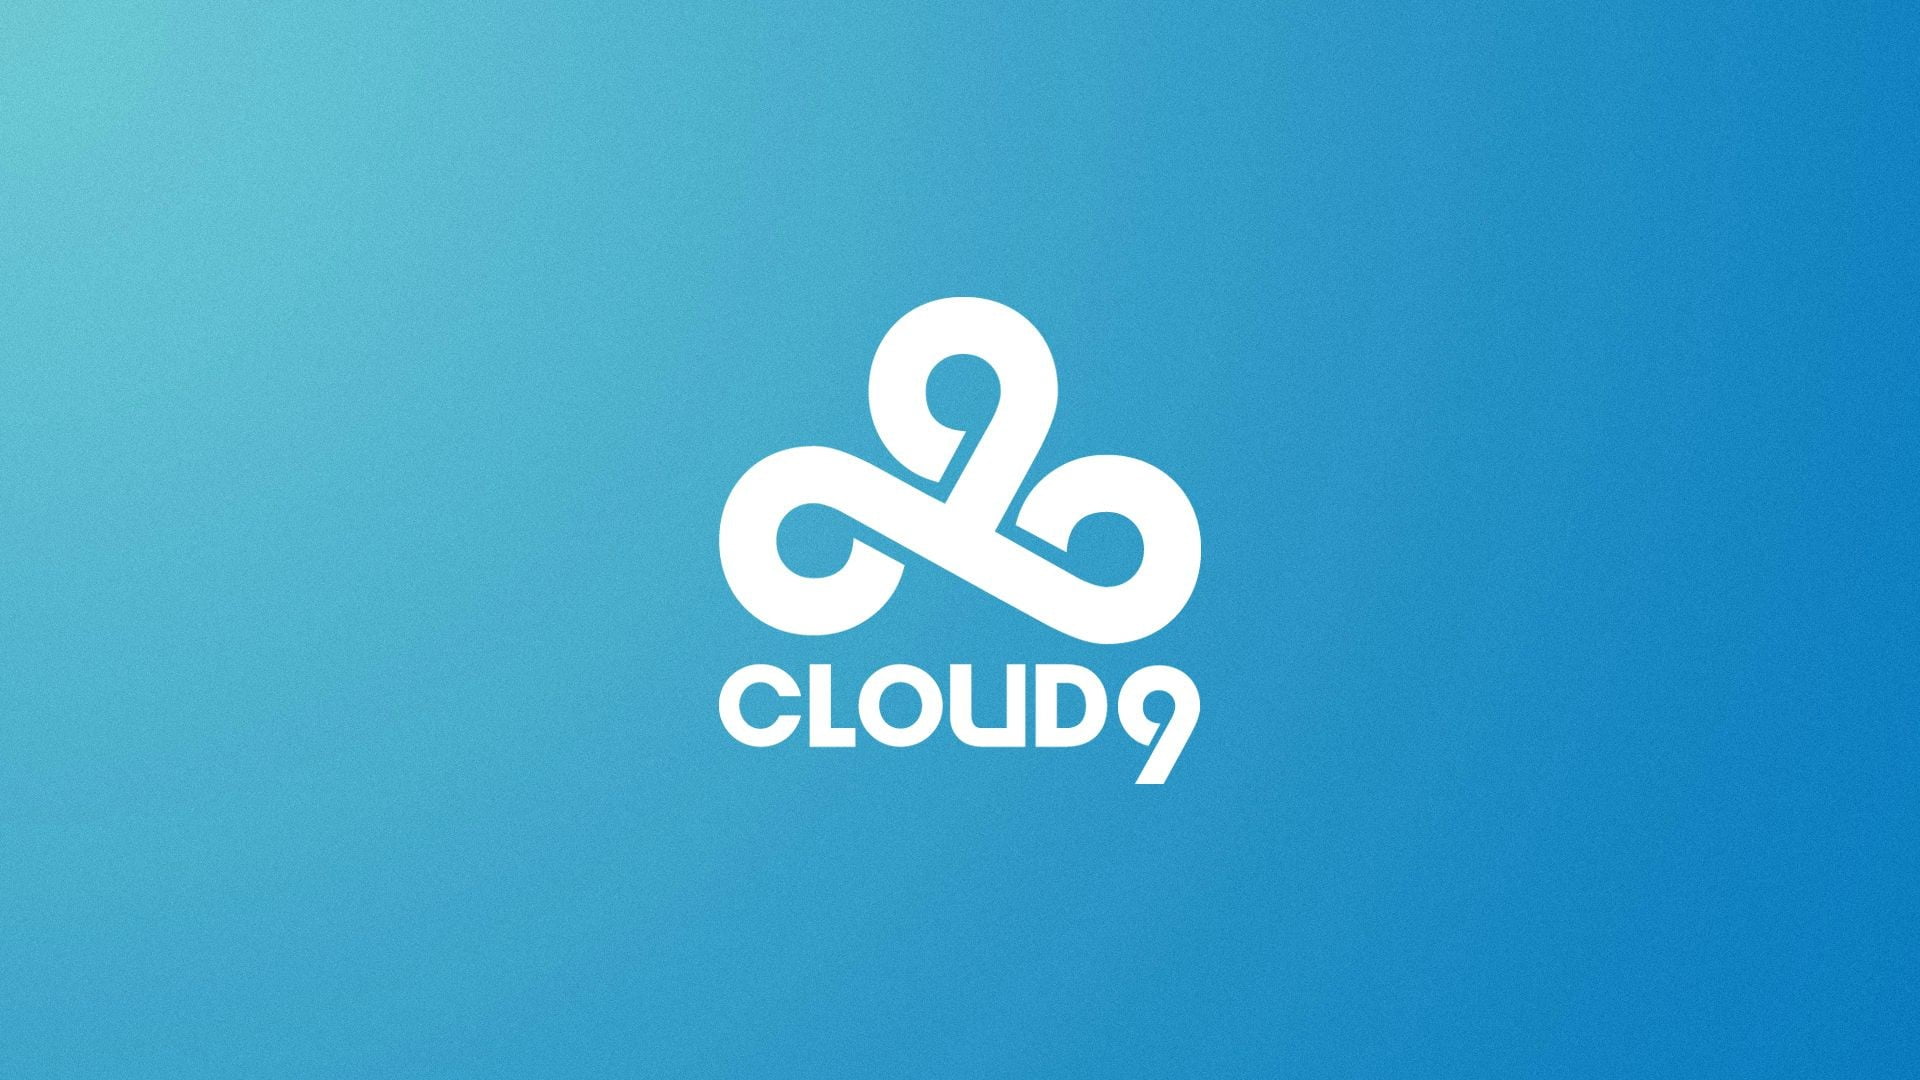 Cloud 9 logo, Cloud9, Dota 2, cloud nine